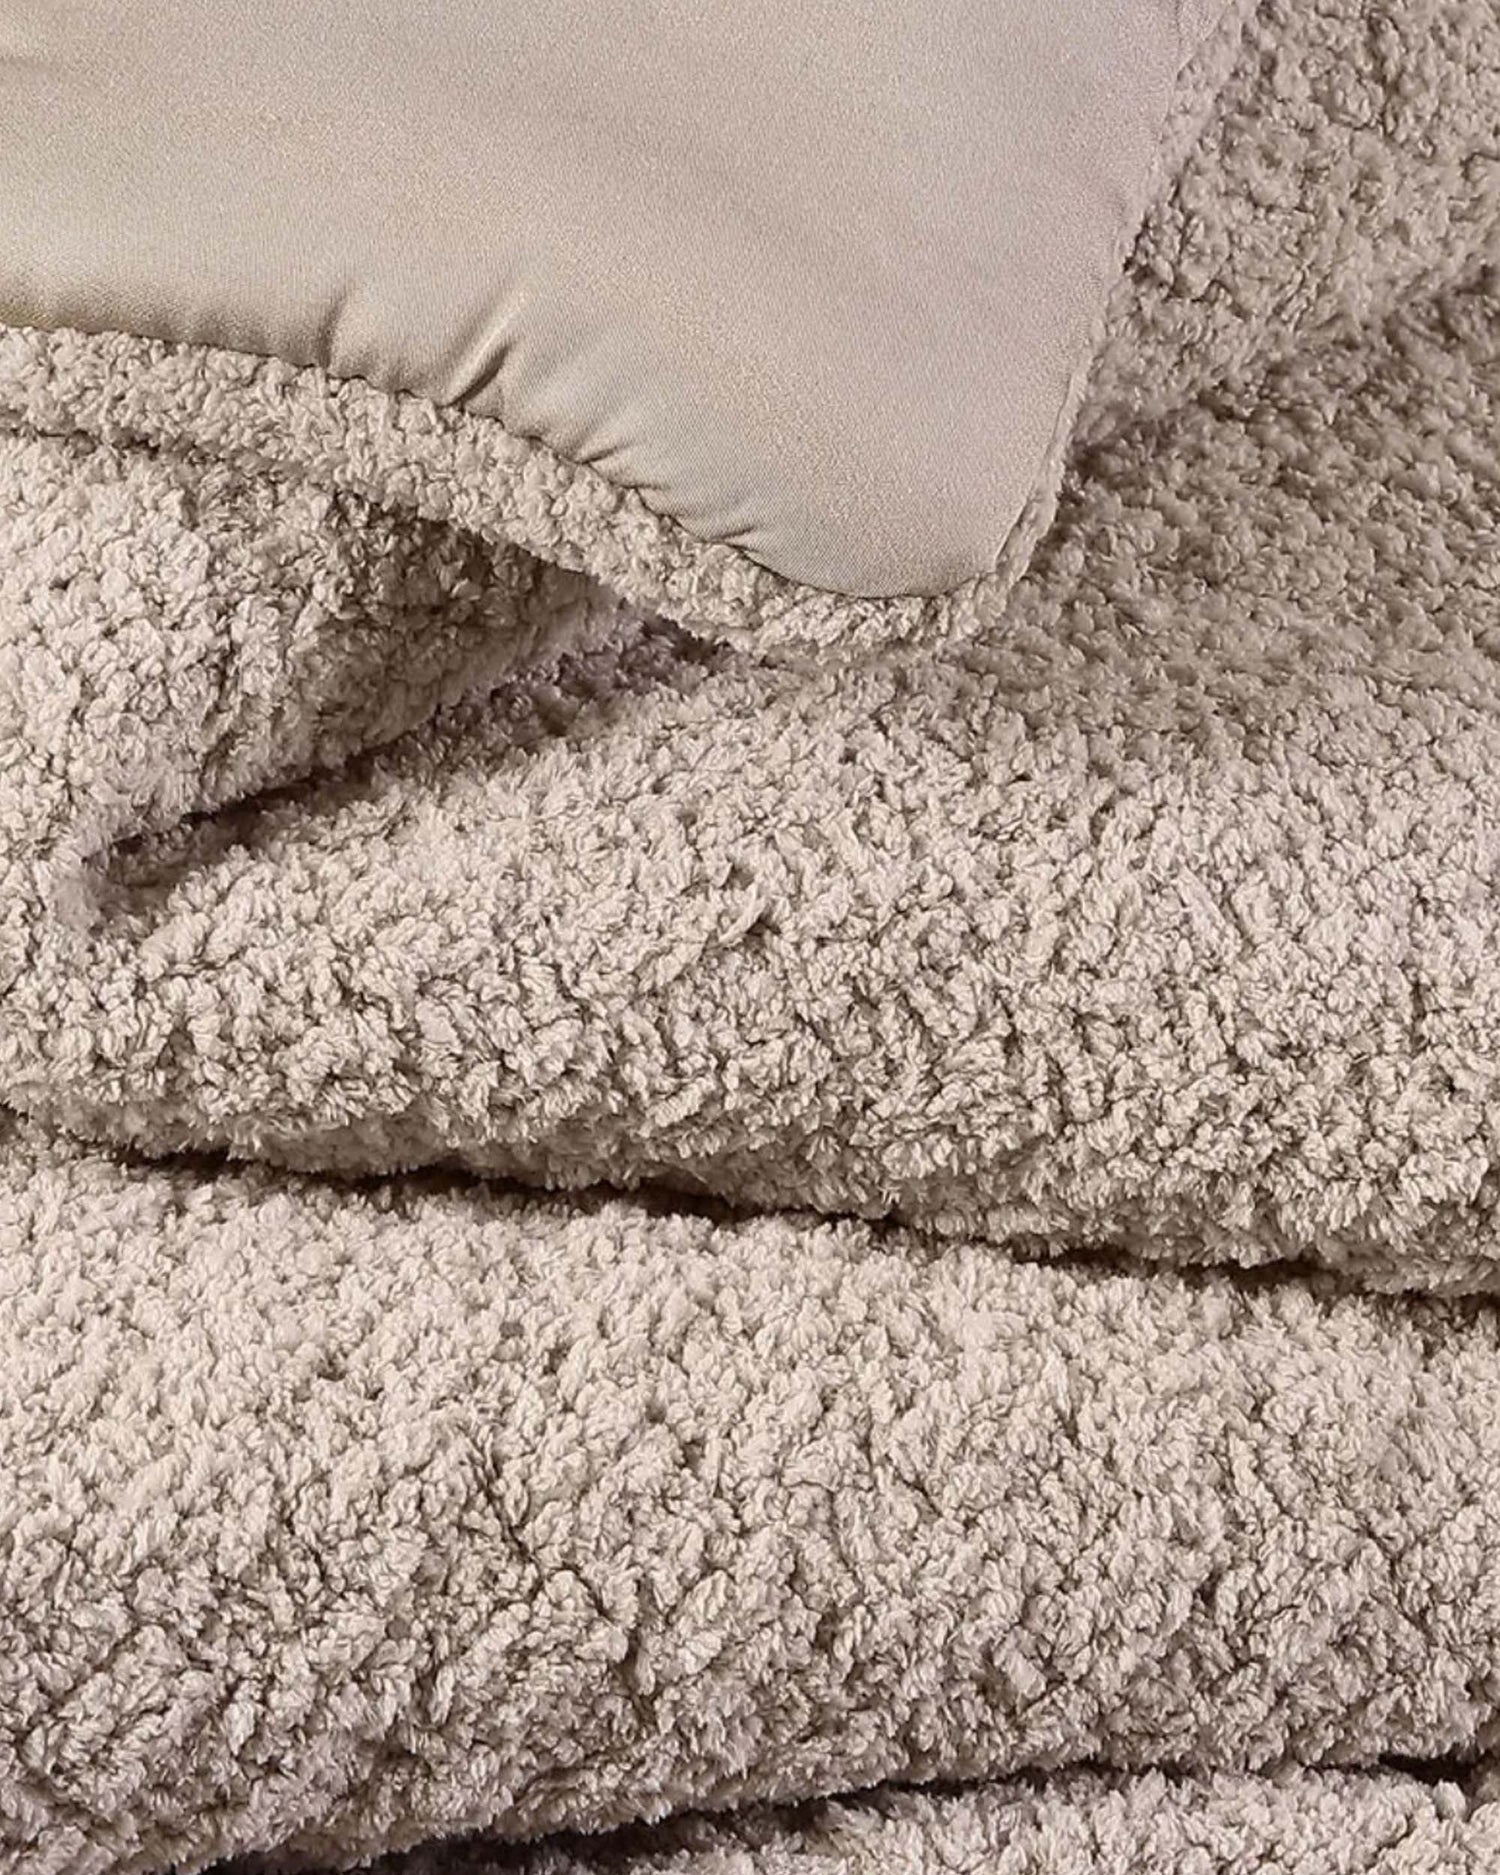 Snug-Basketweave-Comforter